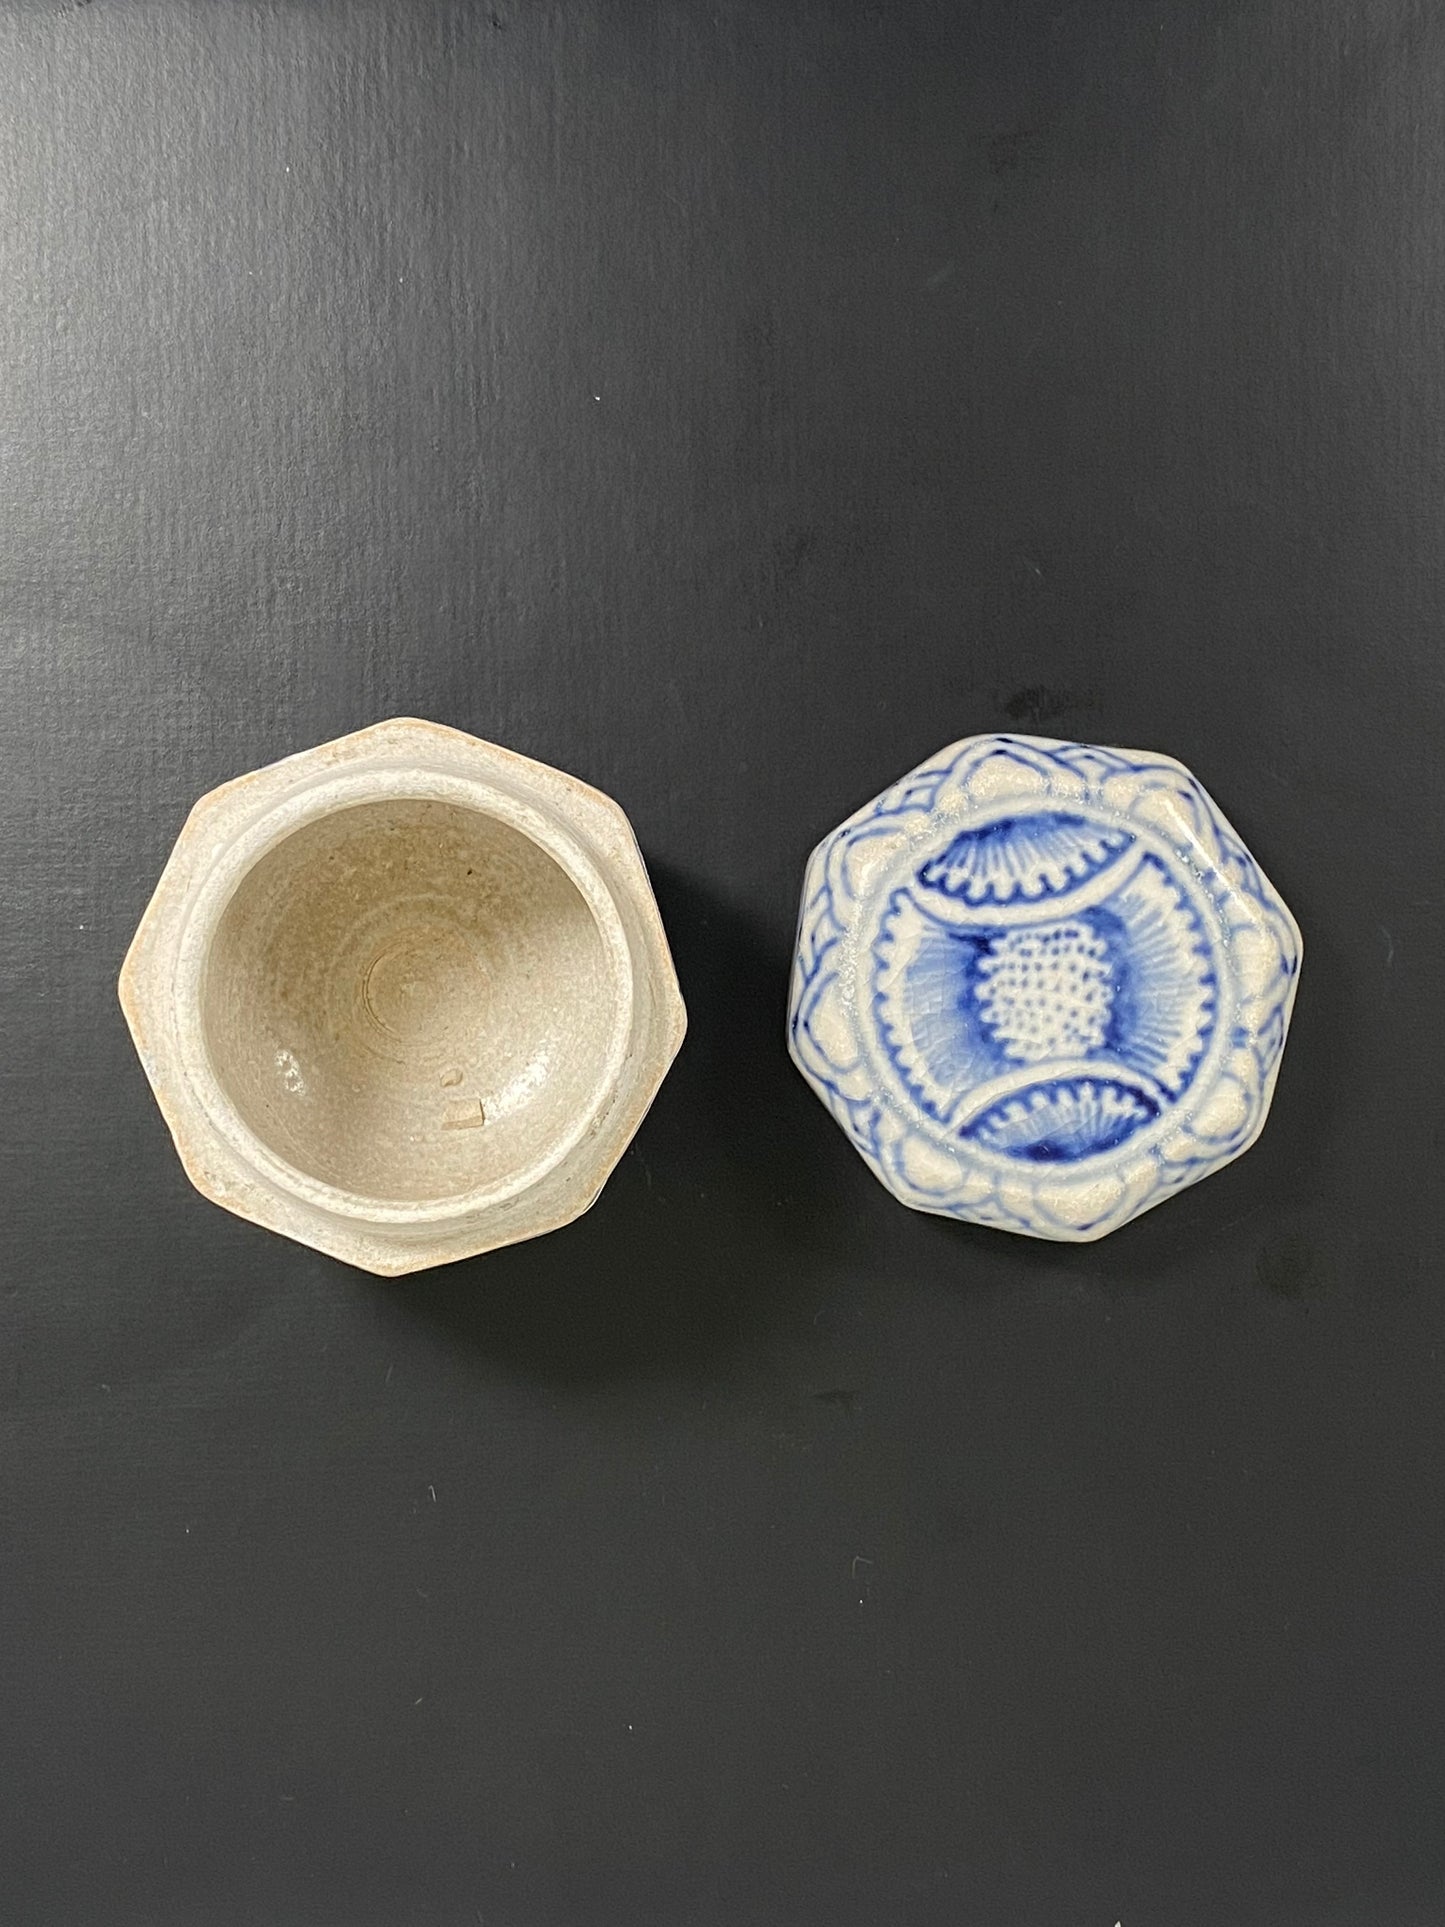 Shipwreck Porcelain Annamese Style Lidded Trinket Box from Hoi An Hoard, 15th century Vietnam